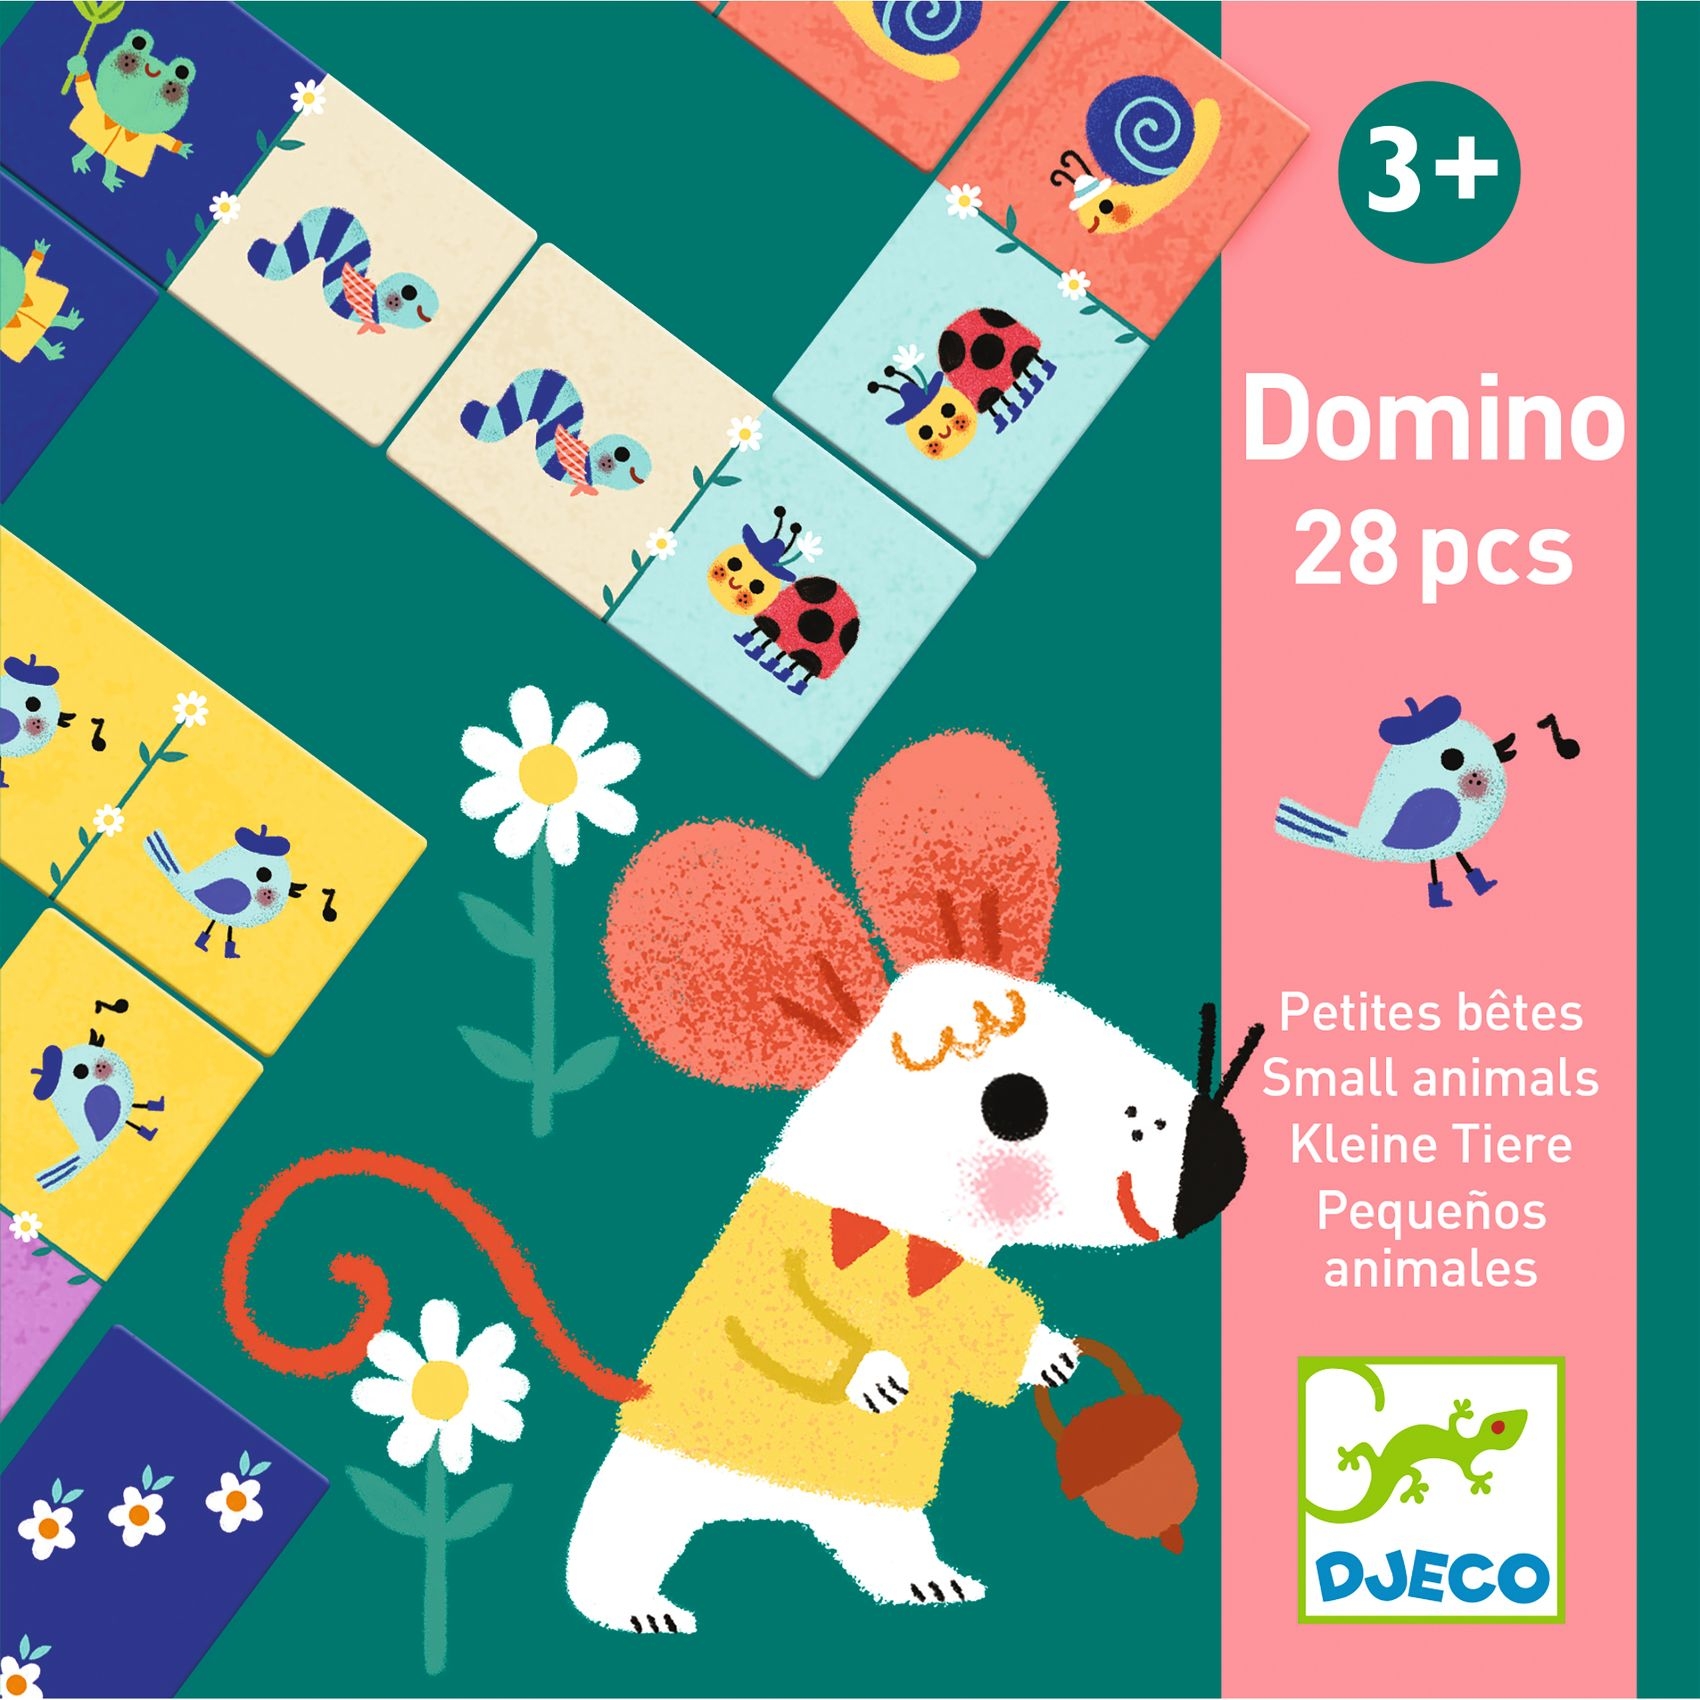 Dominó játék - Kicsi állatok - Domino Small animals - 0